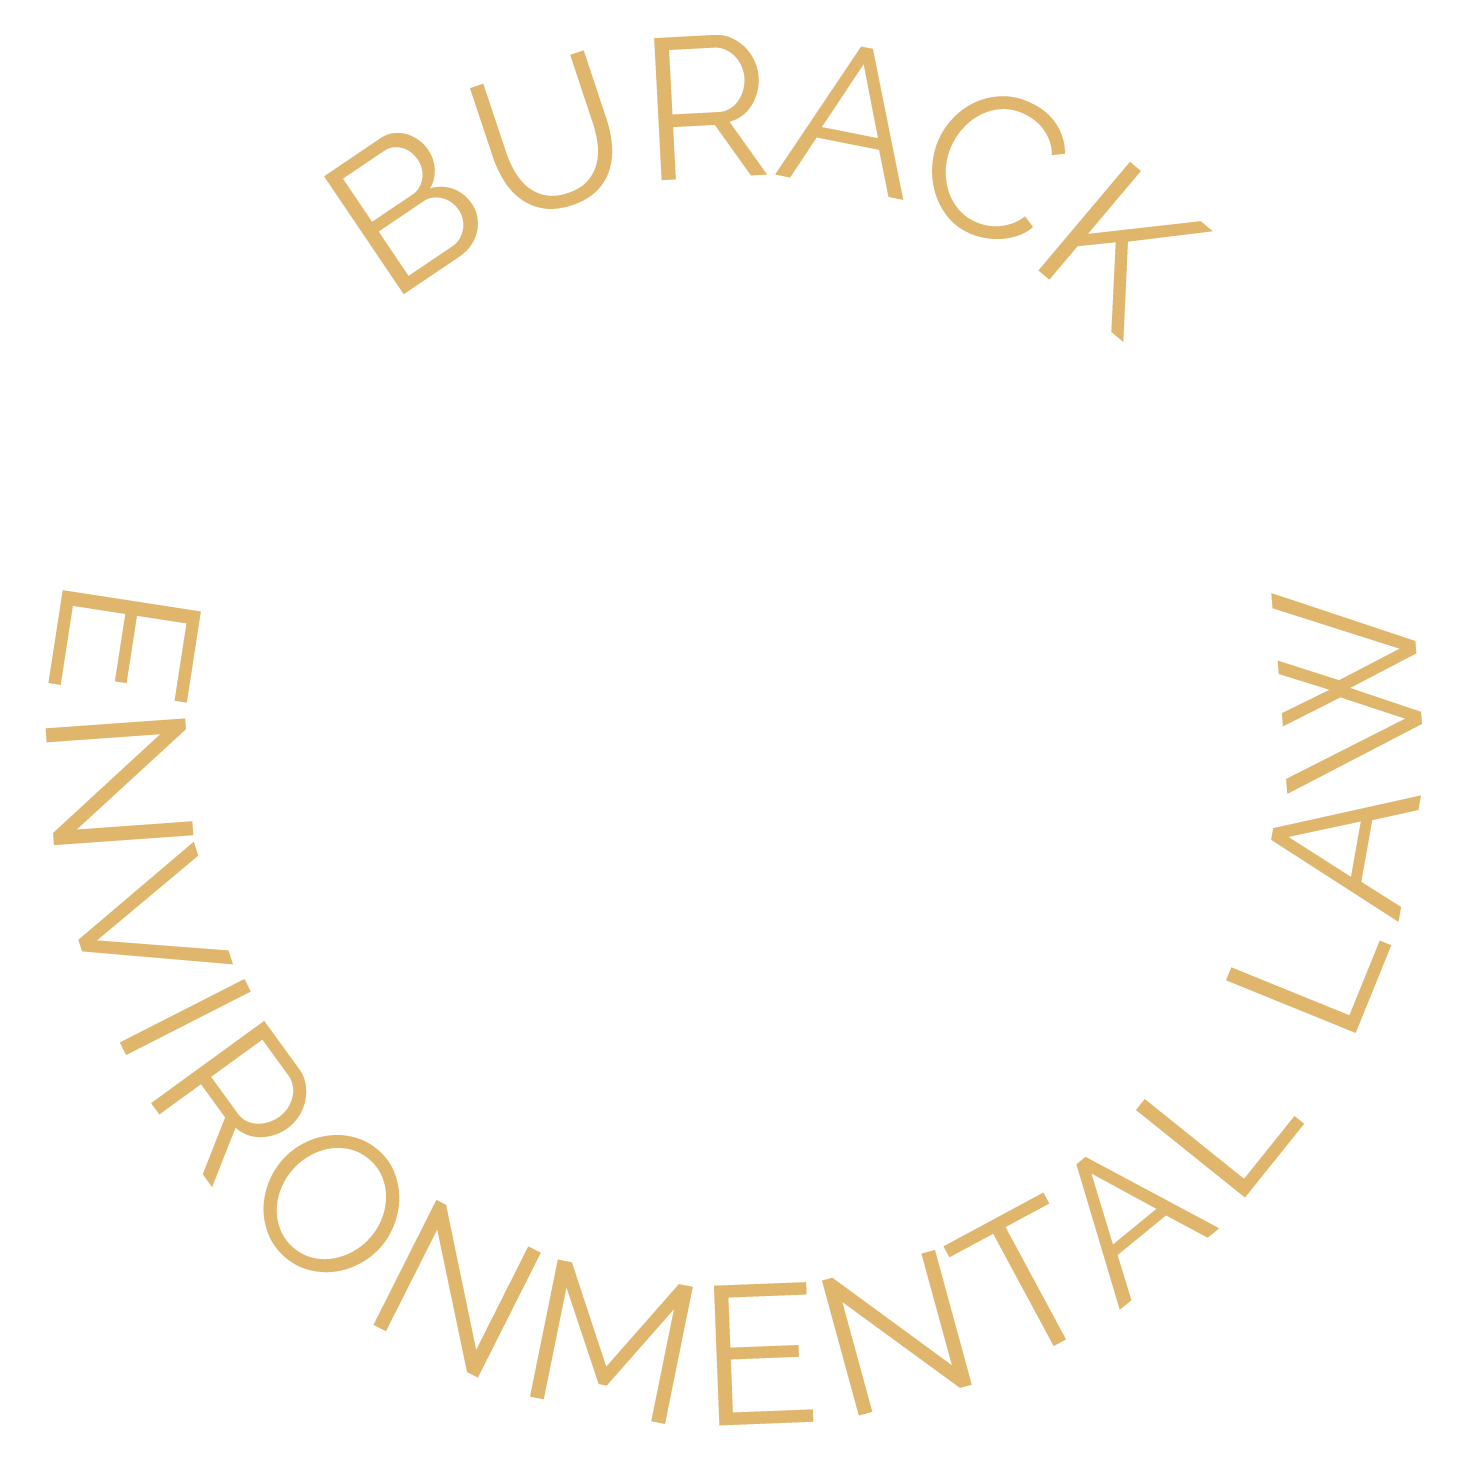 Burack Environmental Law